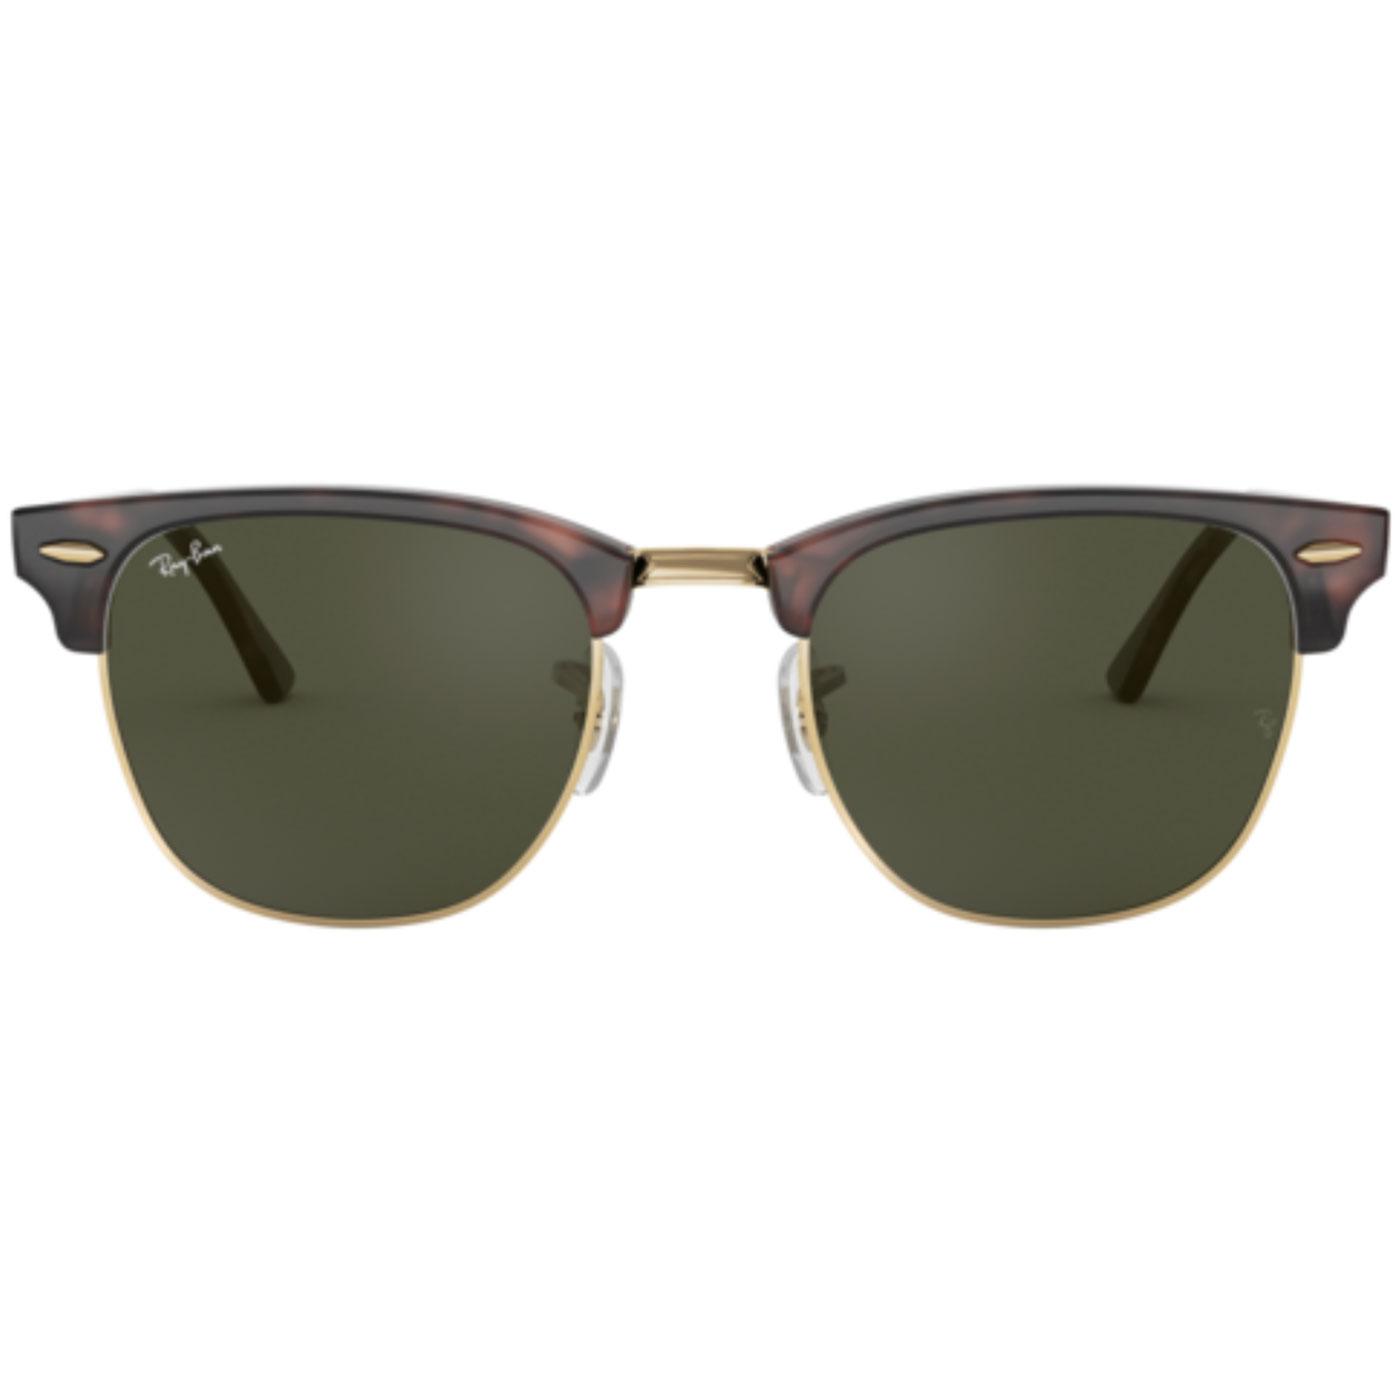 Ray-Ban Clubmaster Retro Mod Sunglasses in Brown